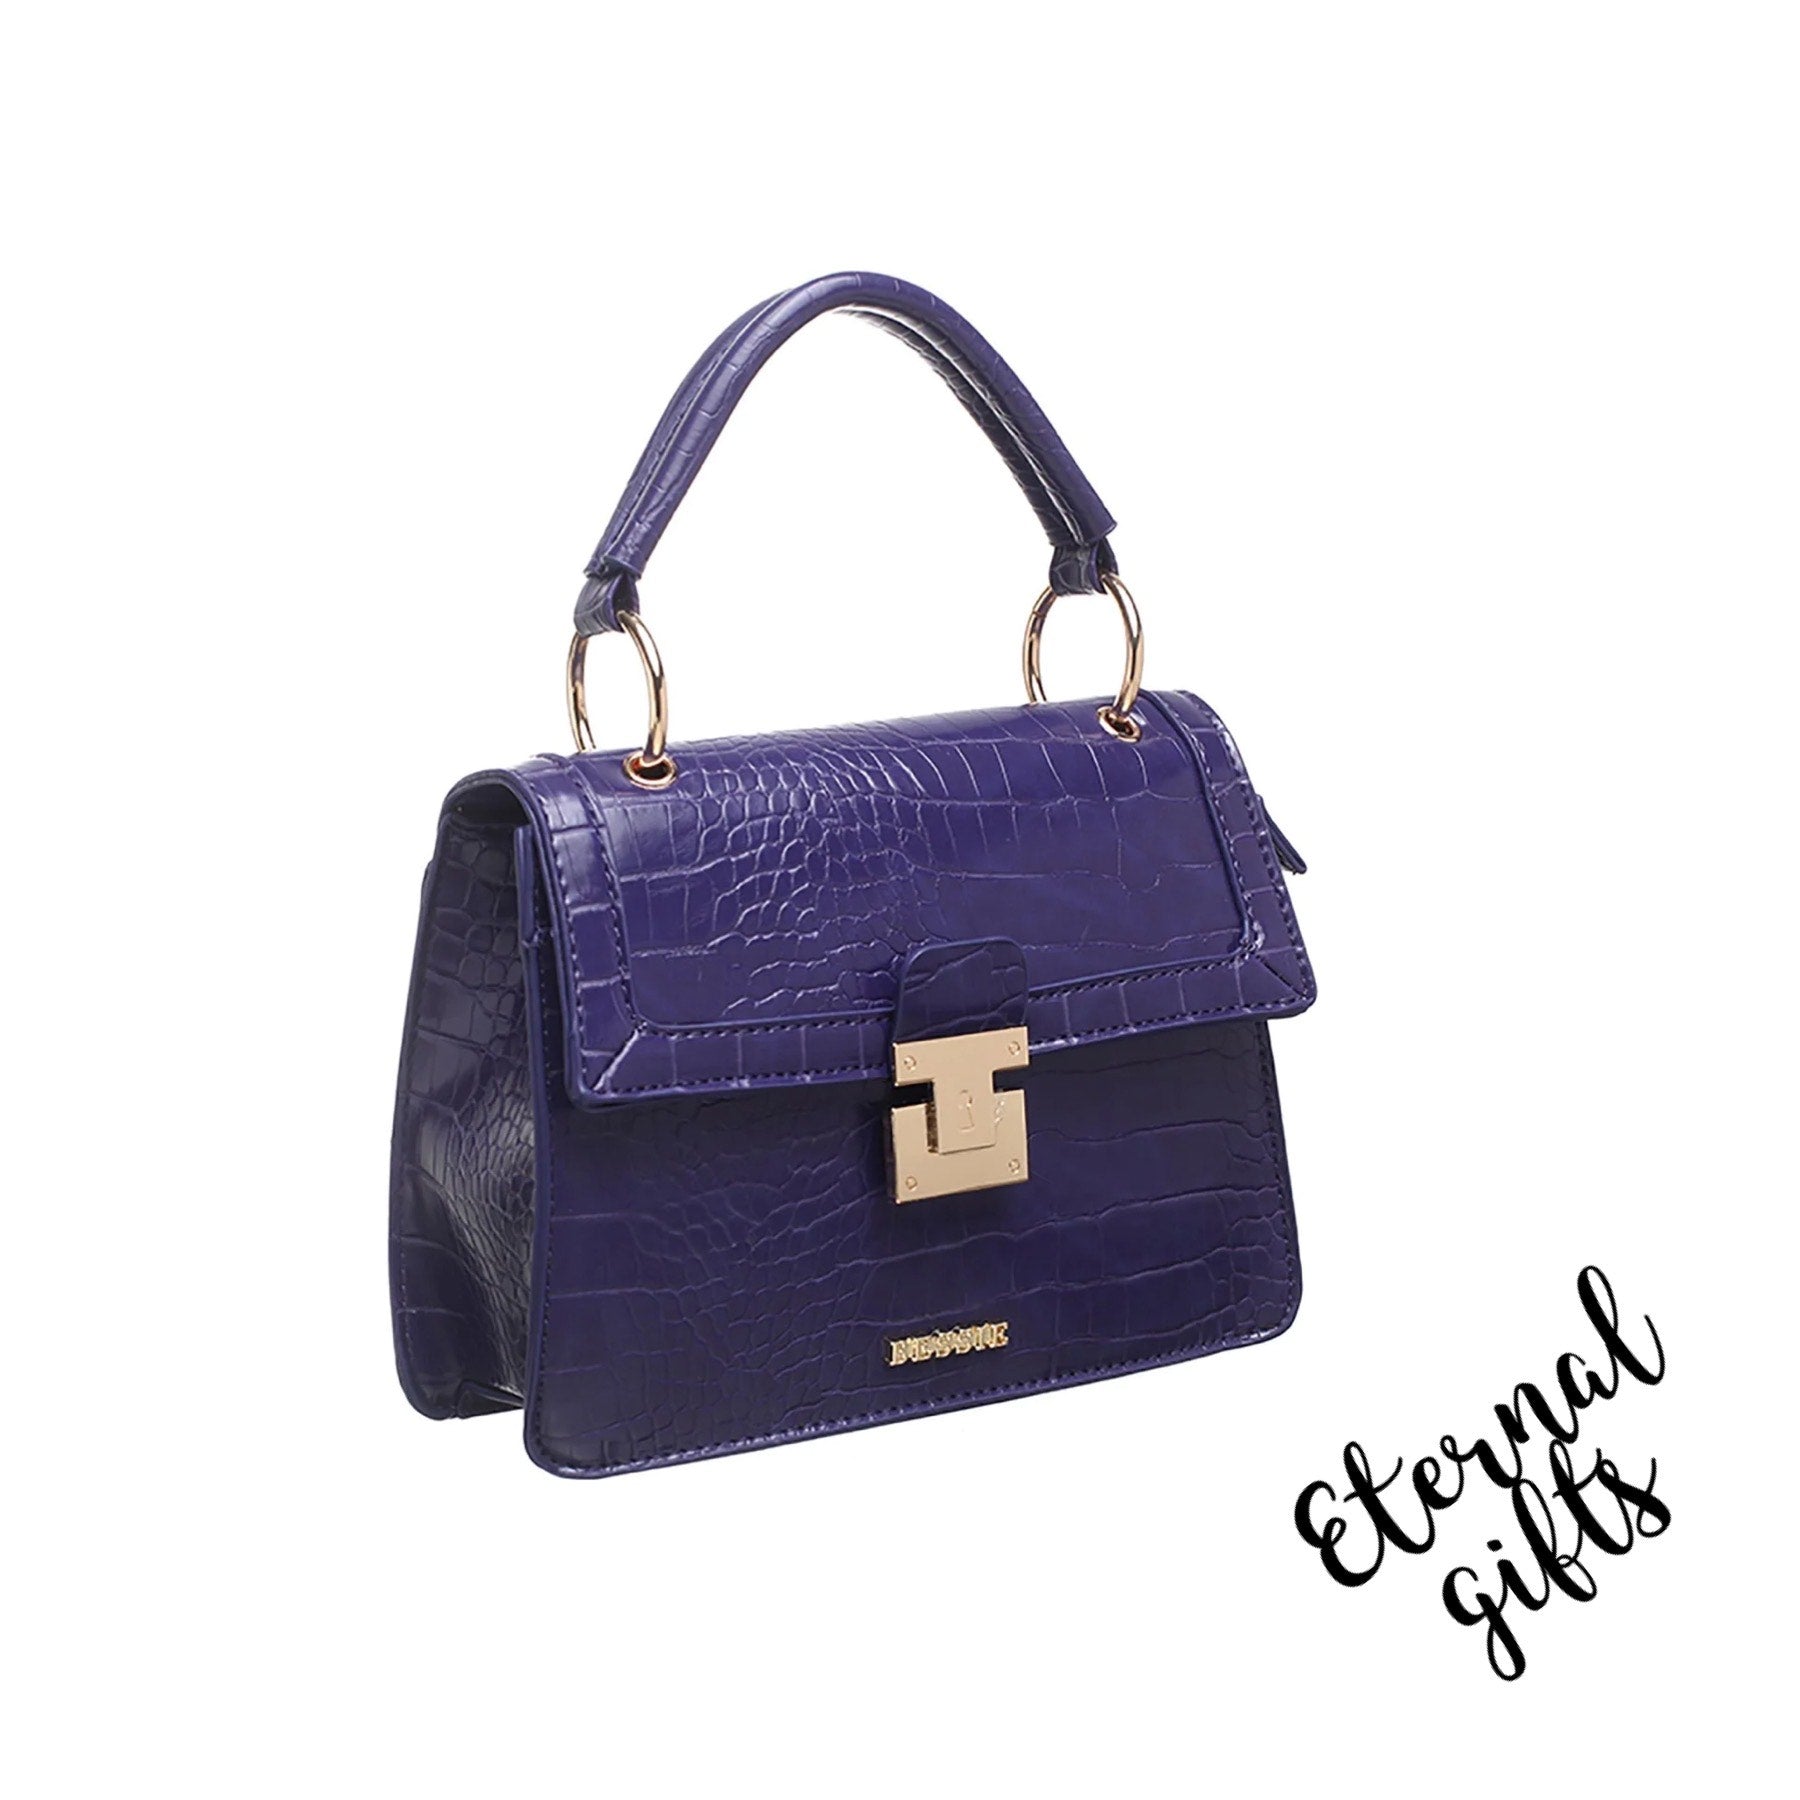 The Clara Handbag in Purple Mini